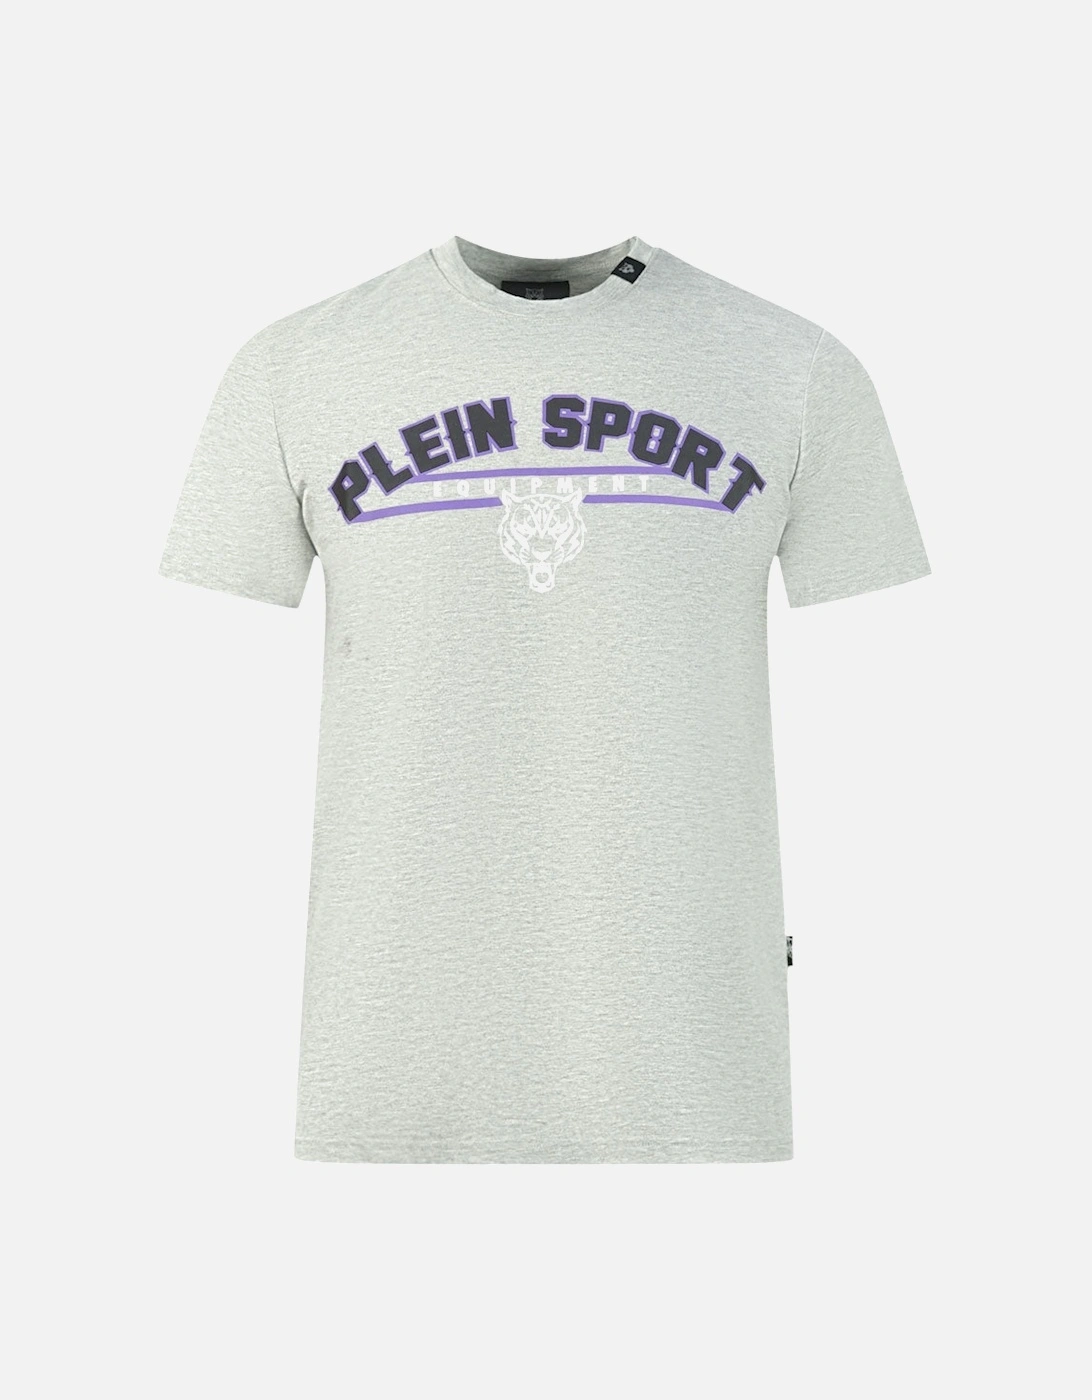 Plein Sport Equipment Grey T-Shirt, 3 of 2